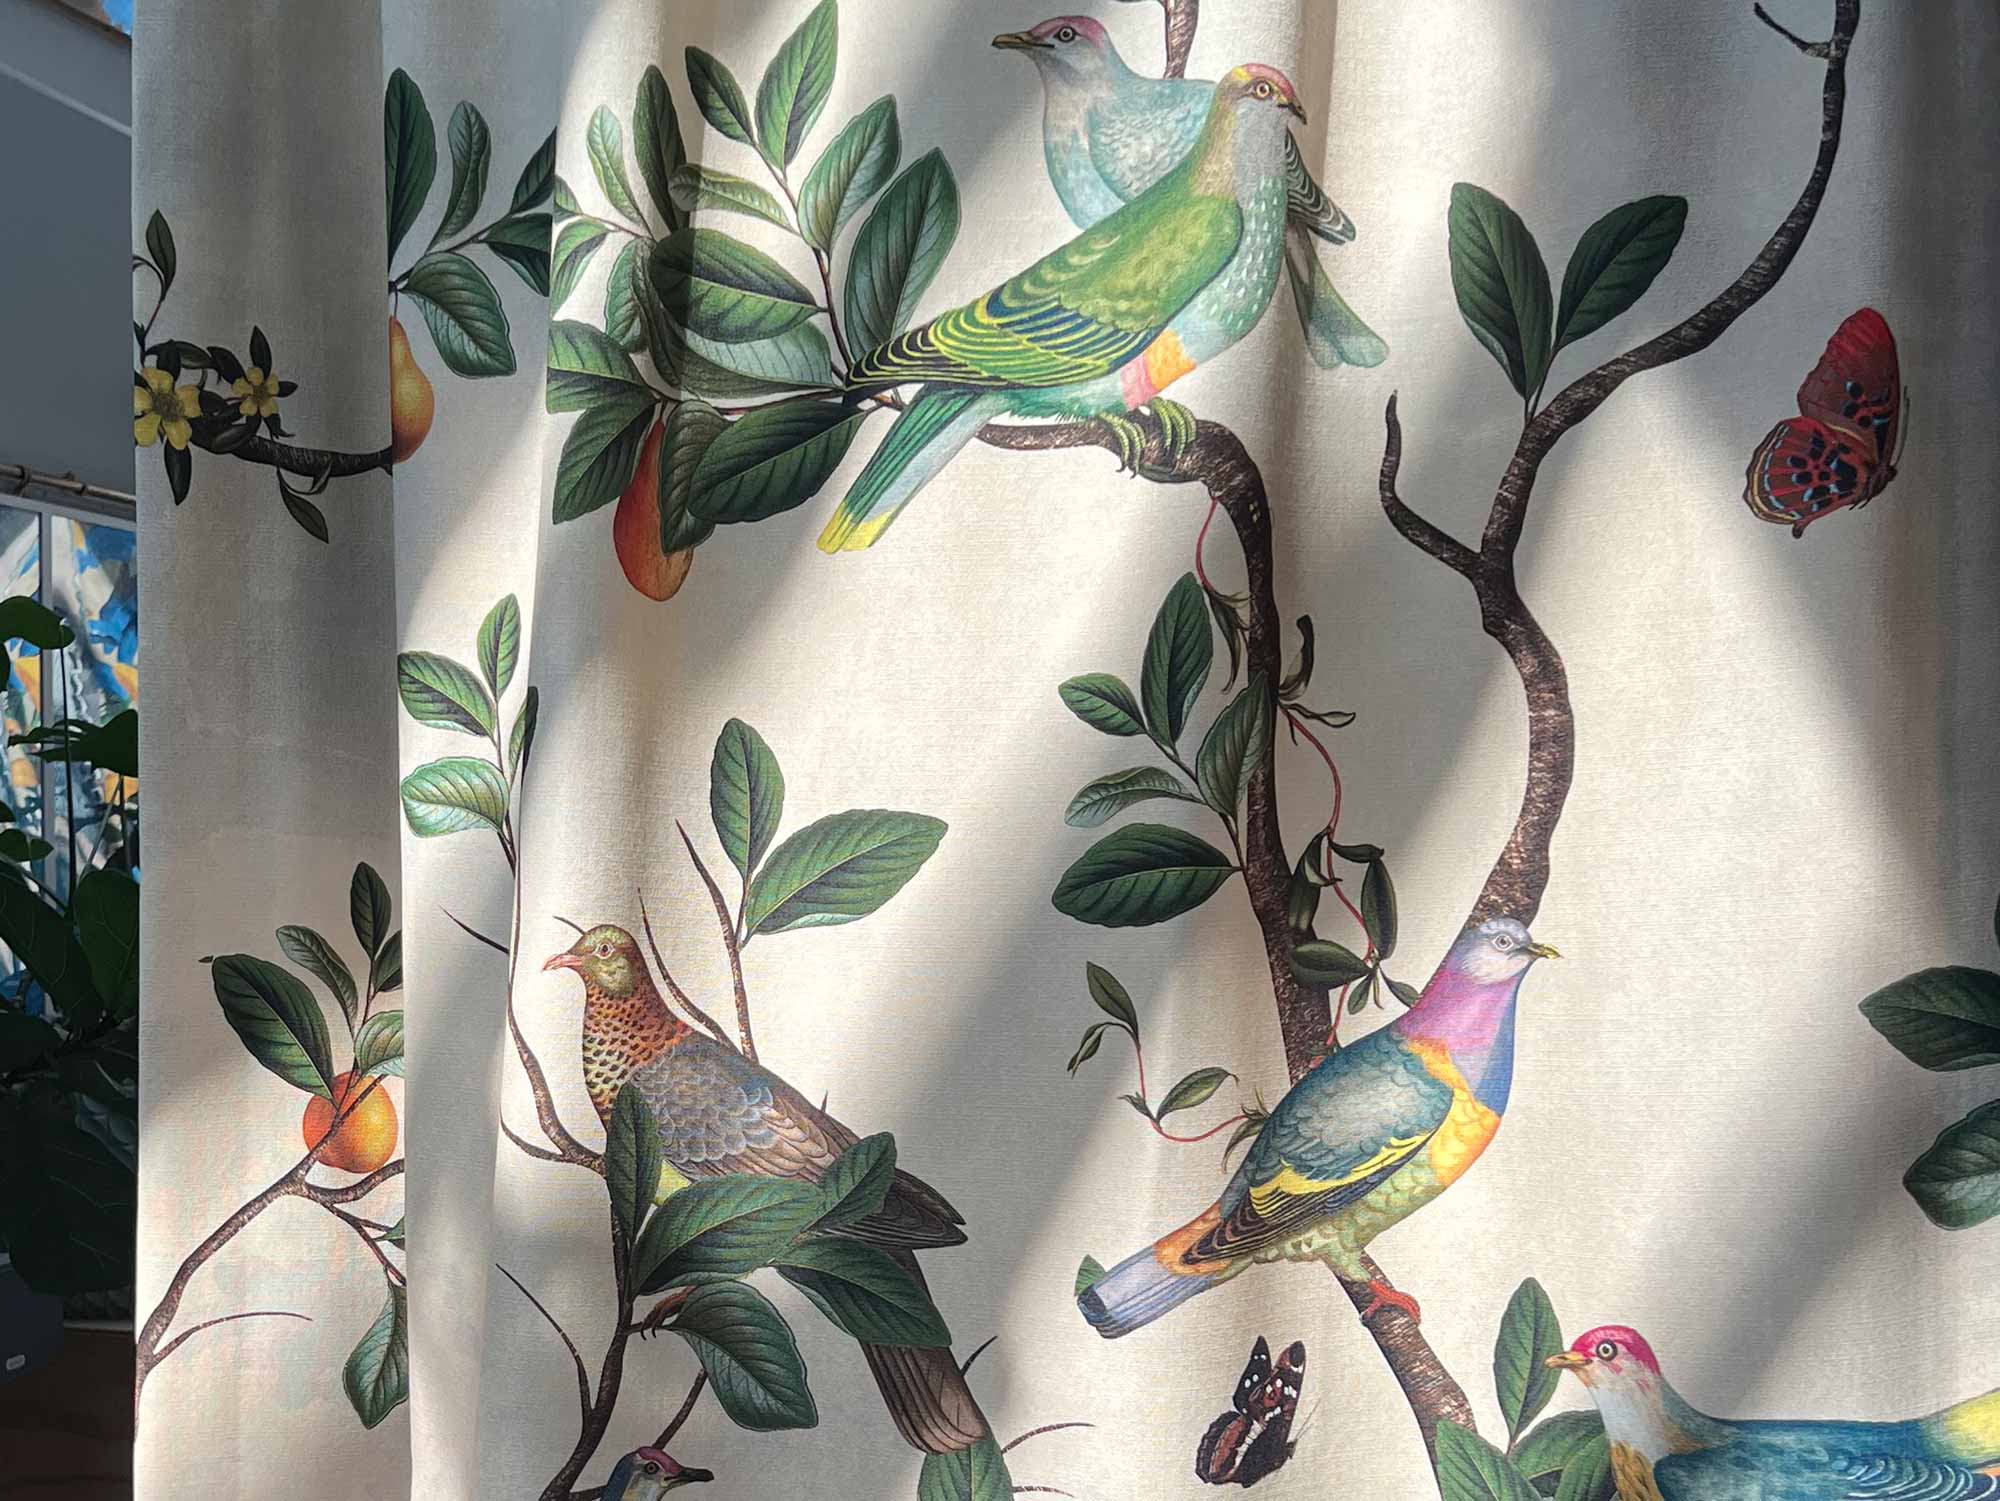 Columbidae design printed to a linen base curtain